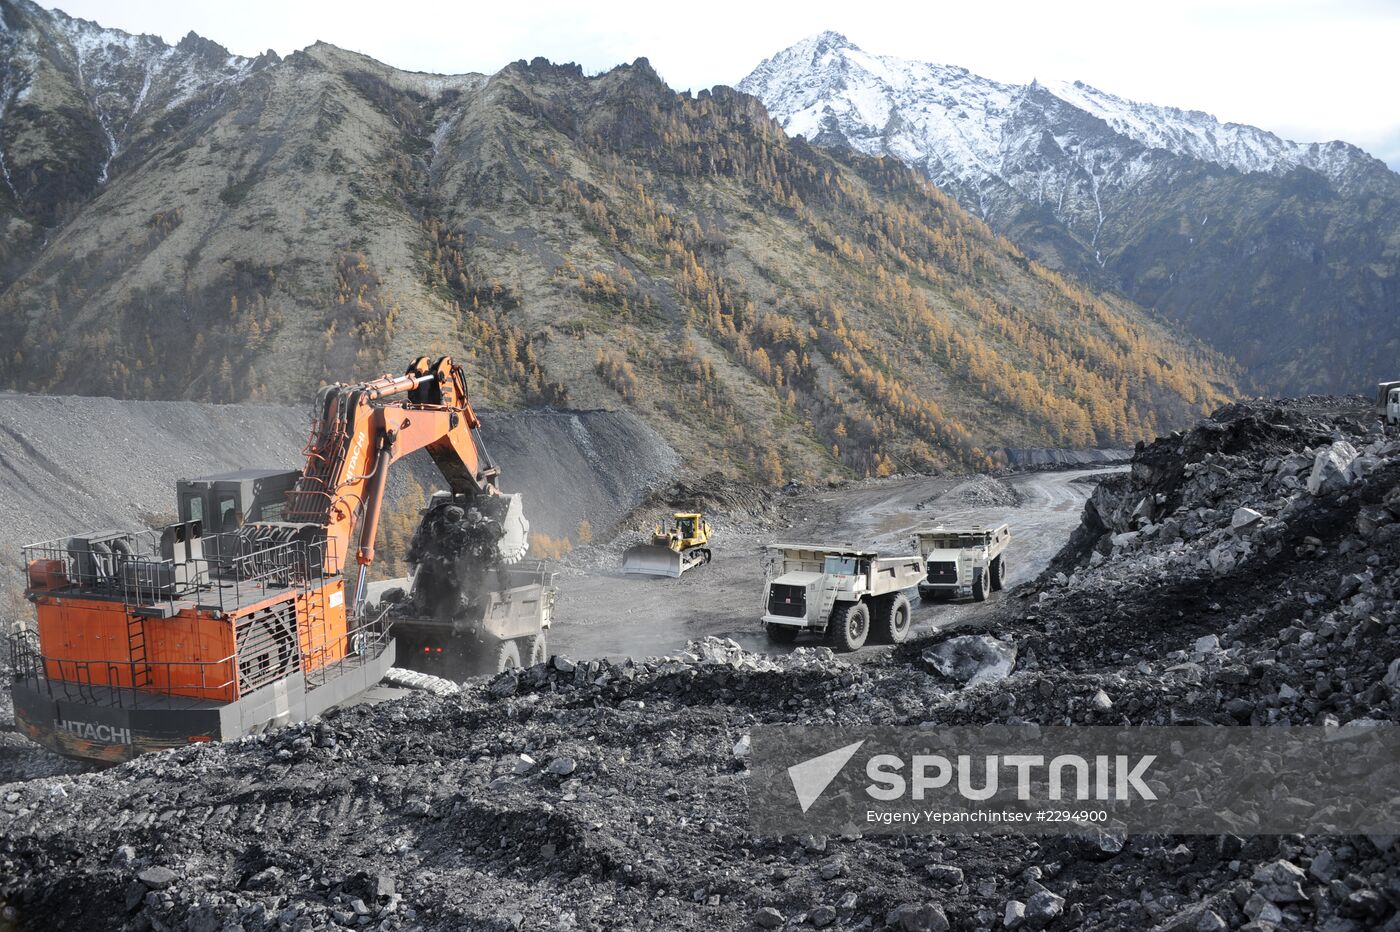 Coal extraction at Apsatskoye coal field in Trans-Baikal Territory